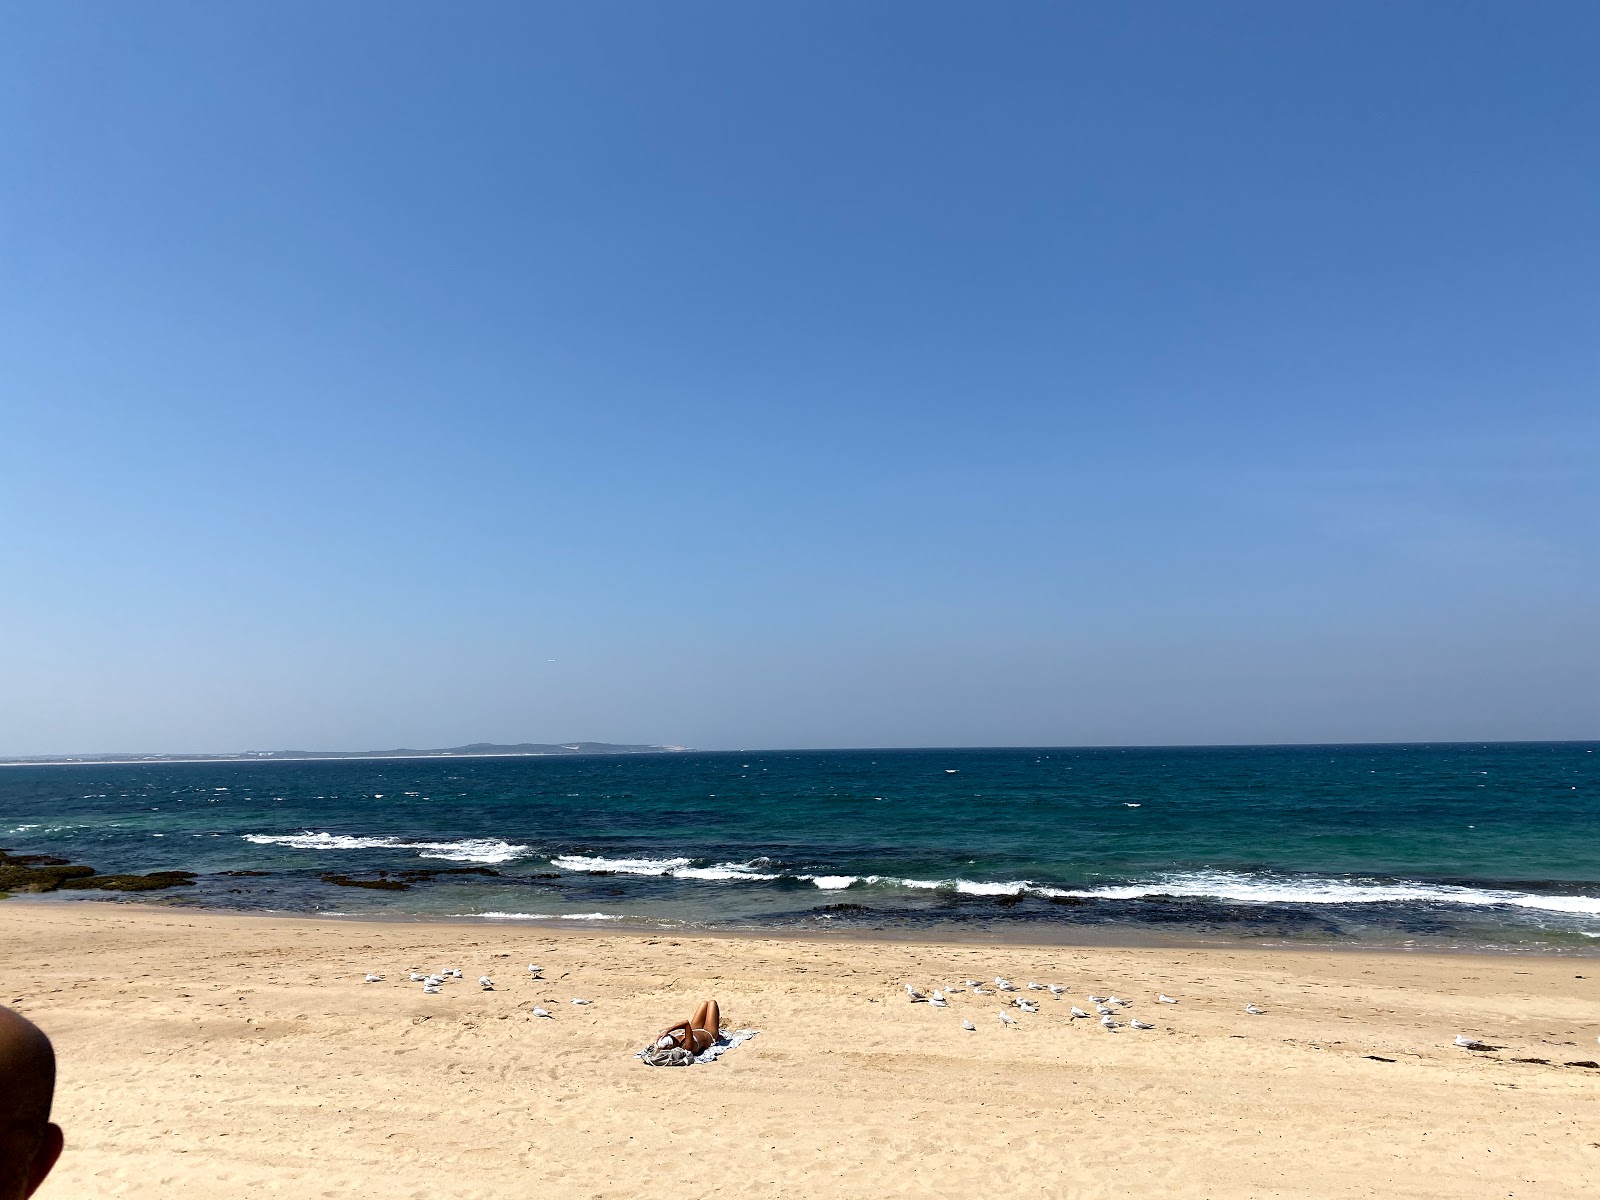 Foto de Shelly Beach - lugar popular entre os apreciadores de relaxamento